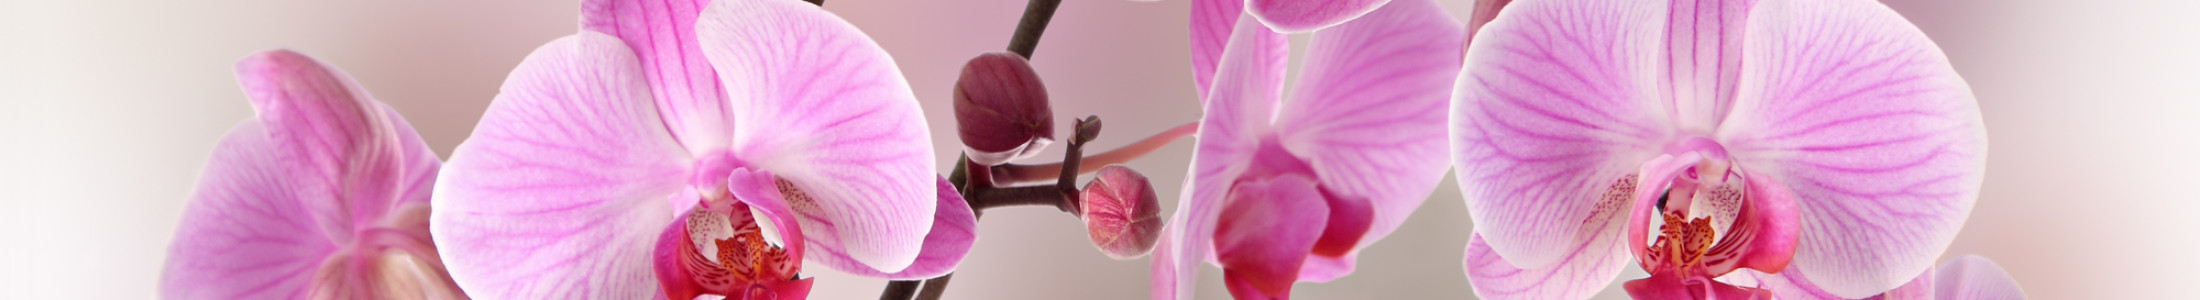 Cymbidium Orchids, Dendrobium Orchids, Phalaenopsis Orchids